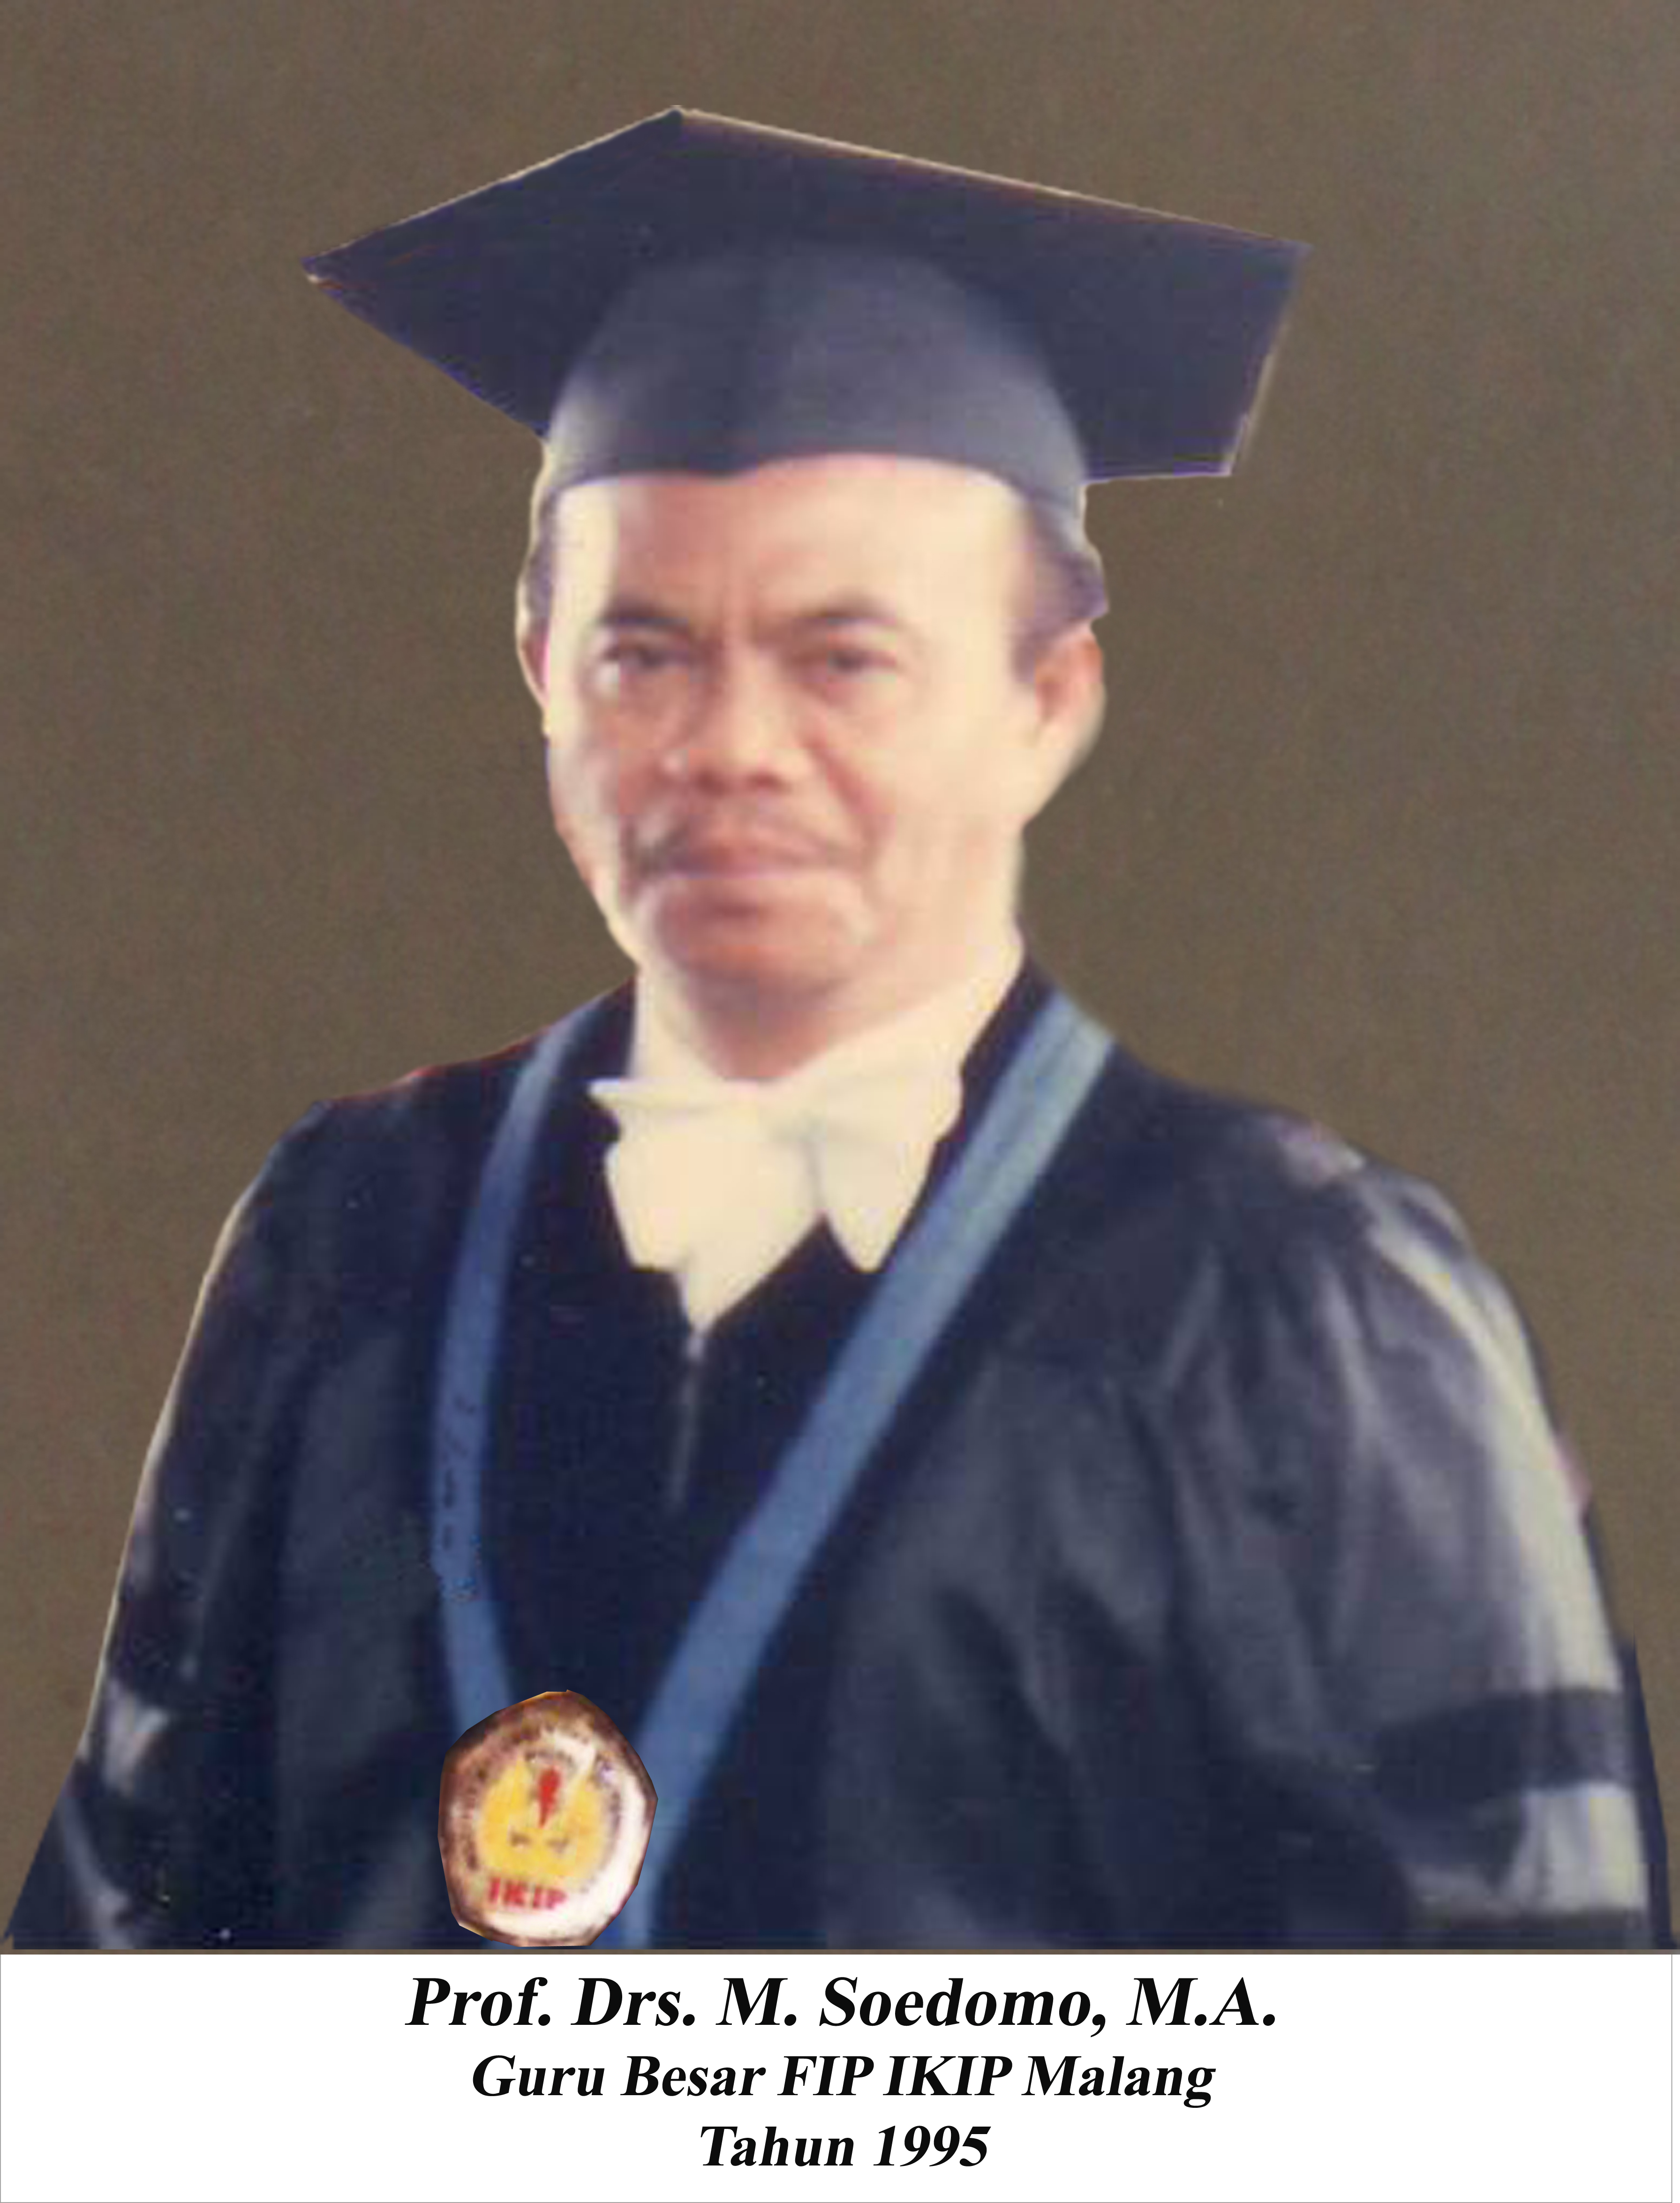 Prof. H.M. Soedomo